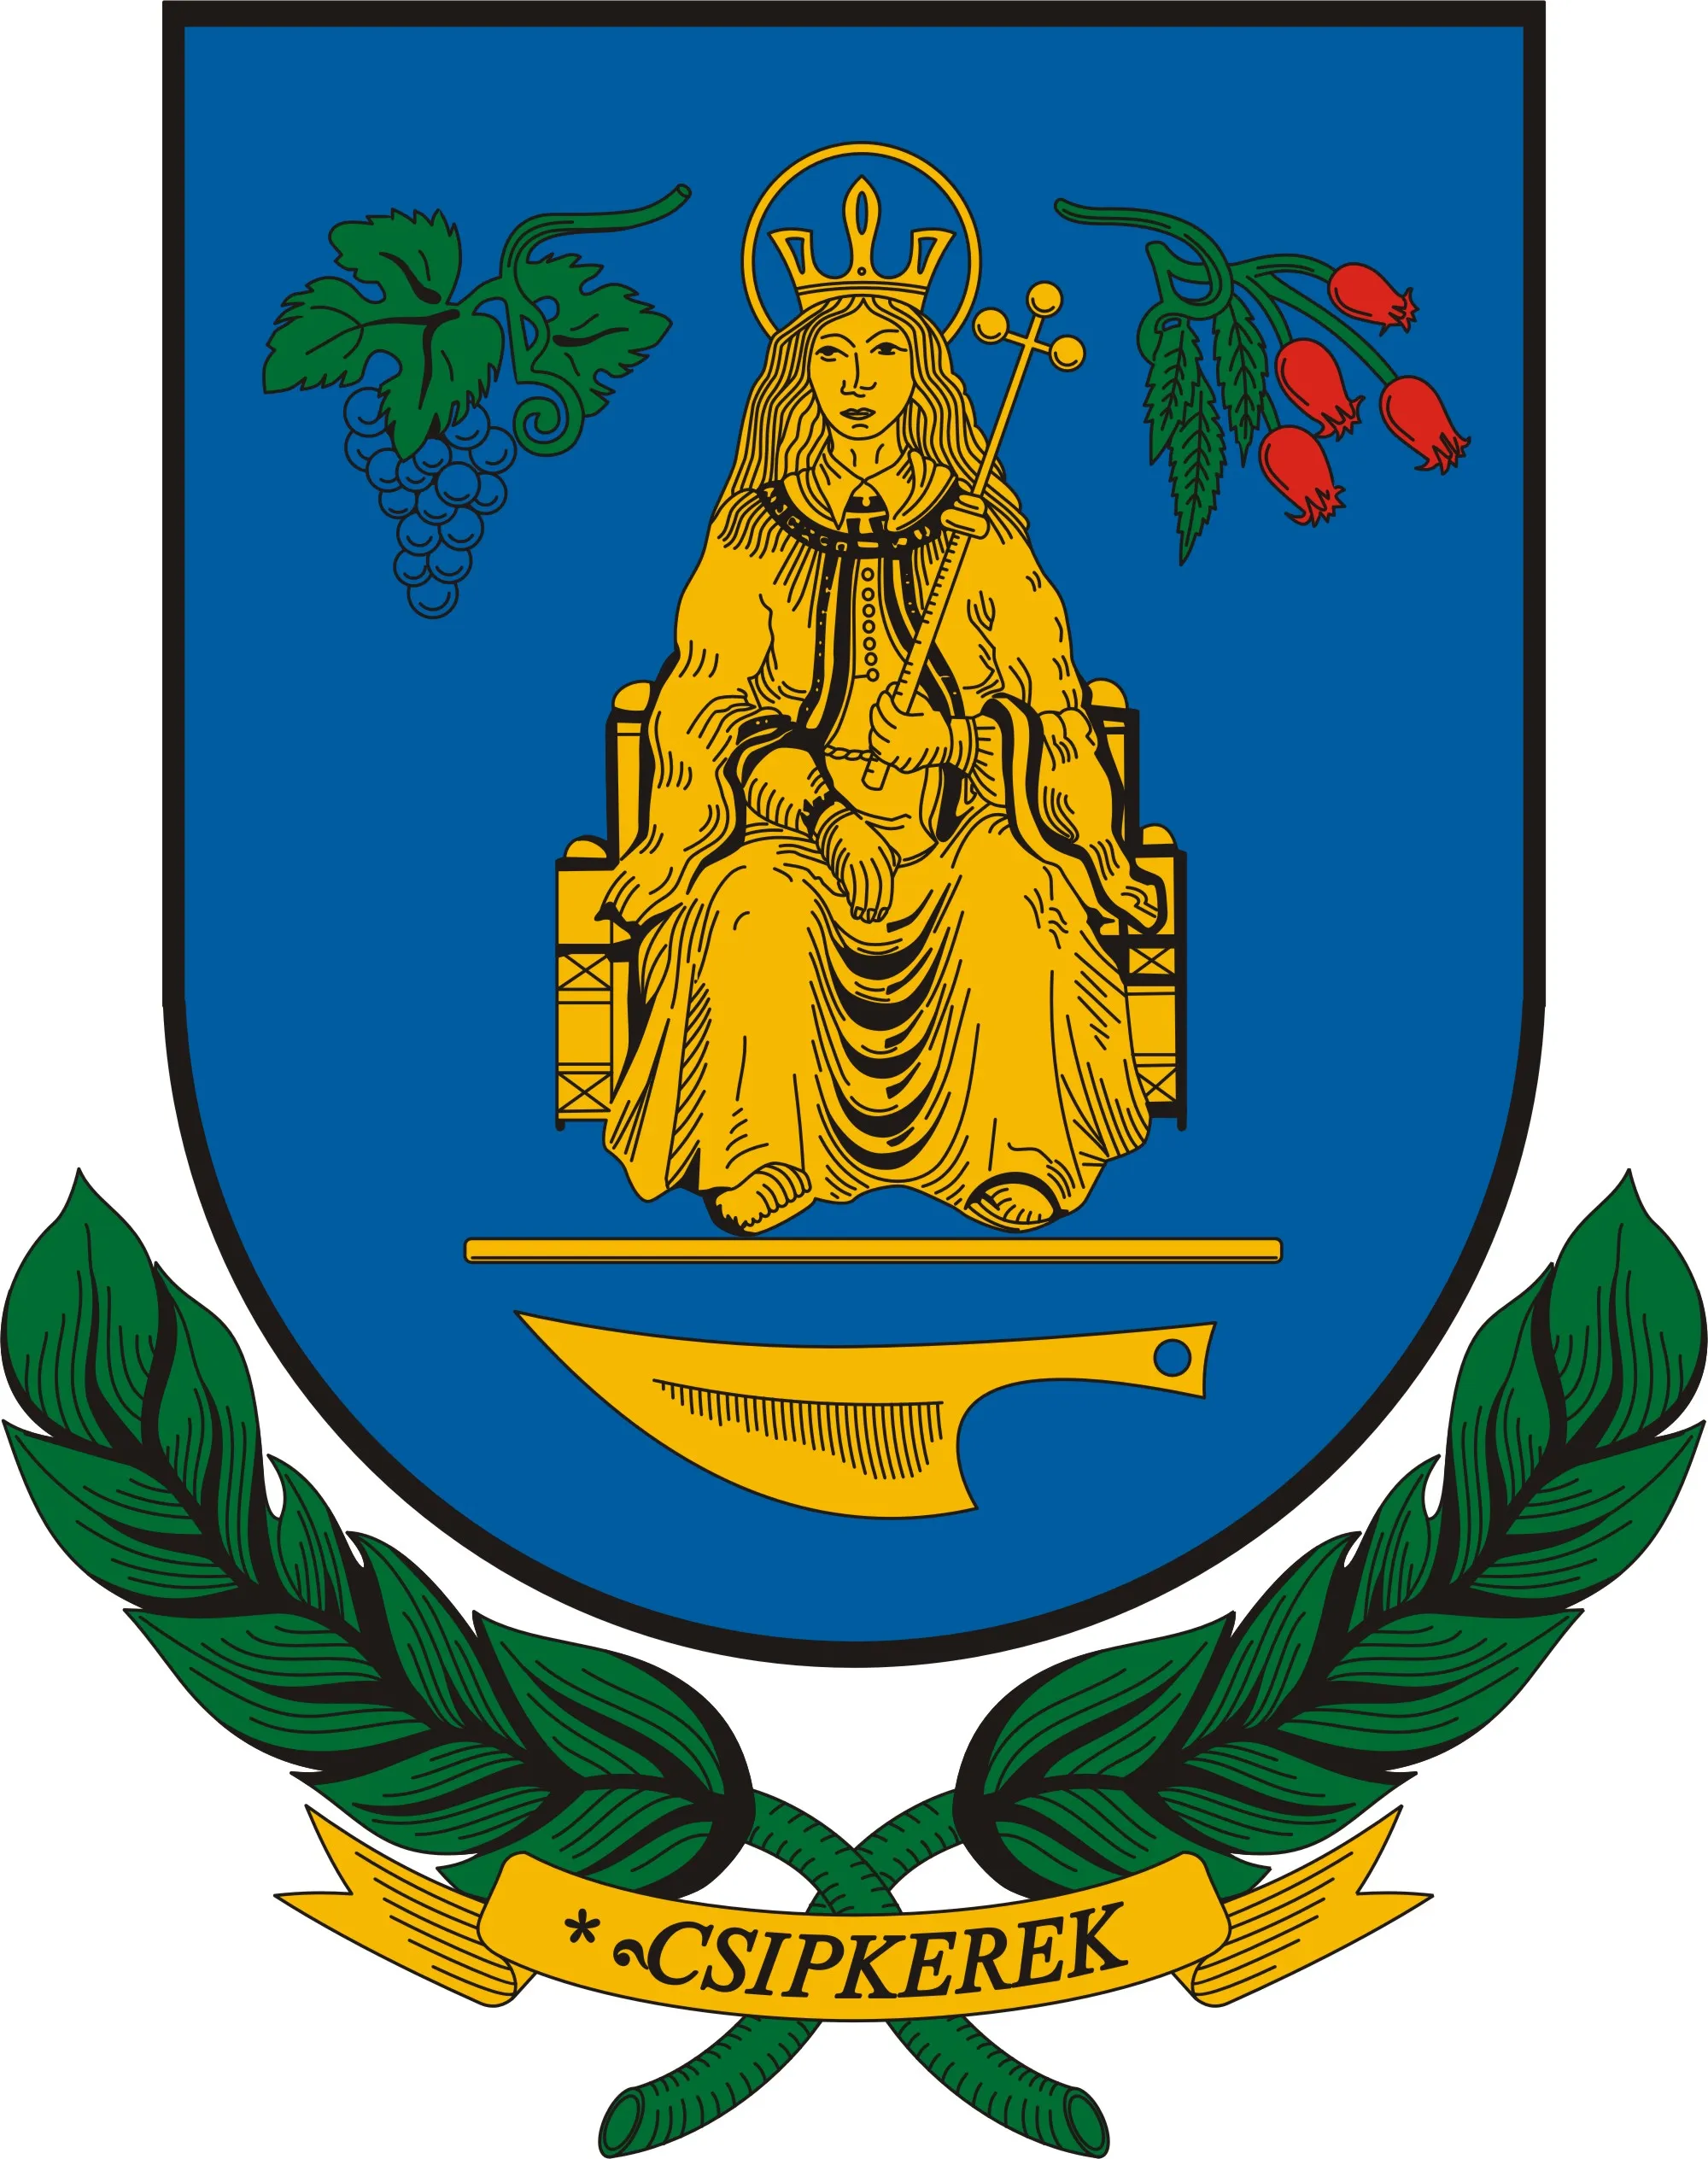 Photo showing: Coat of arms of Csipkerek, Hungary